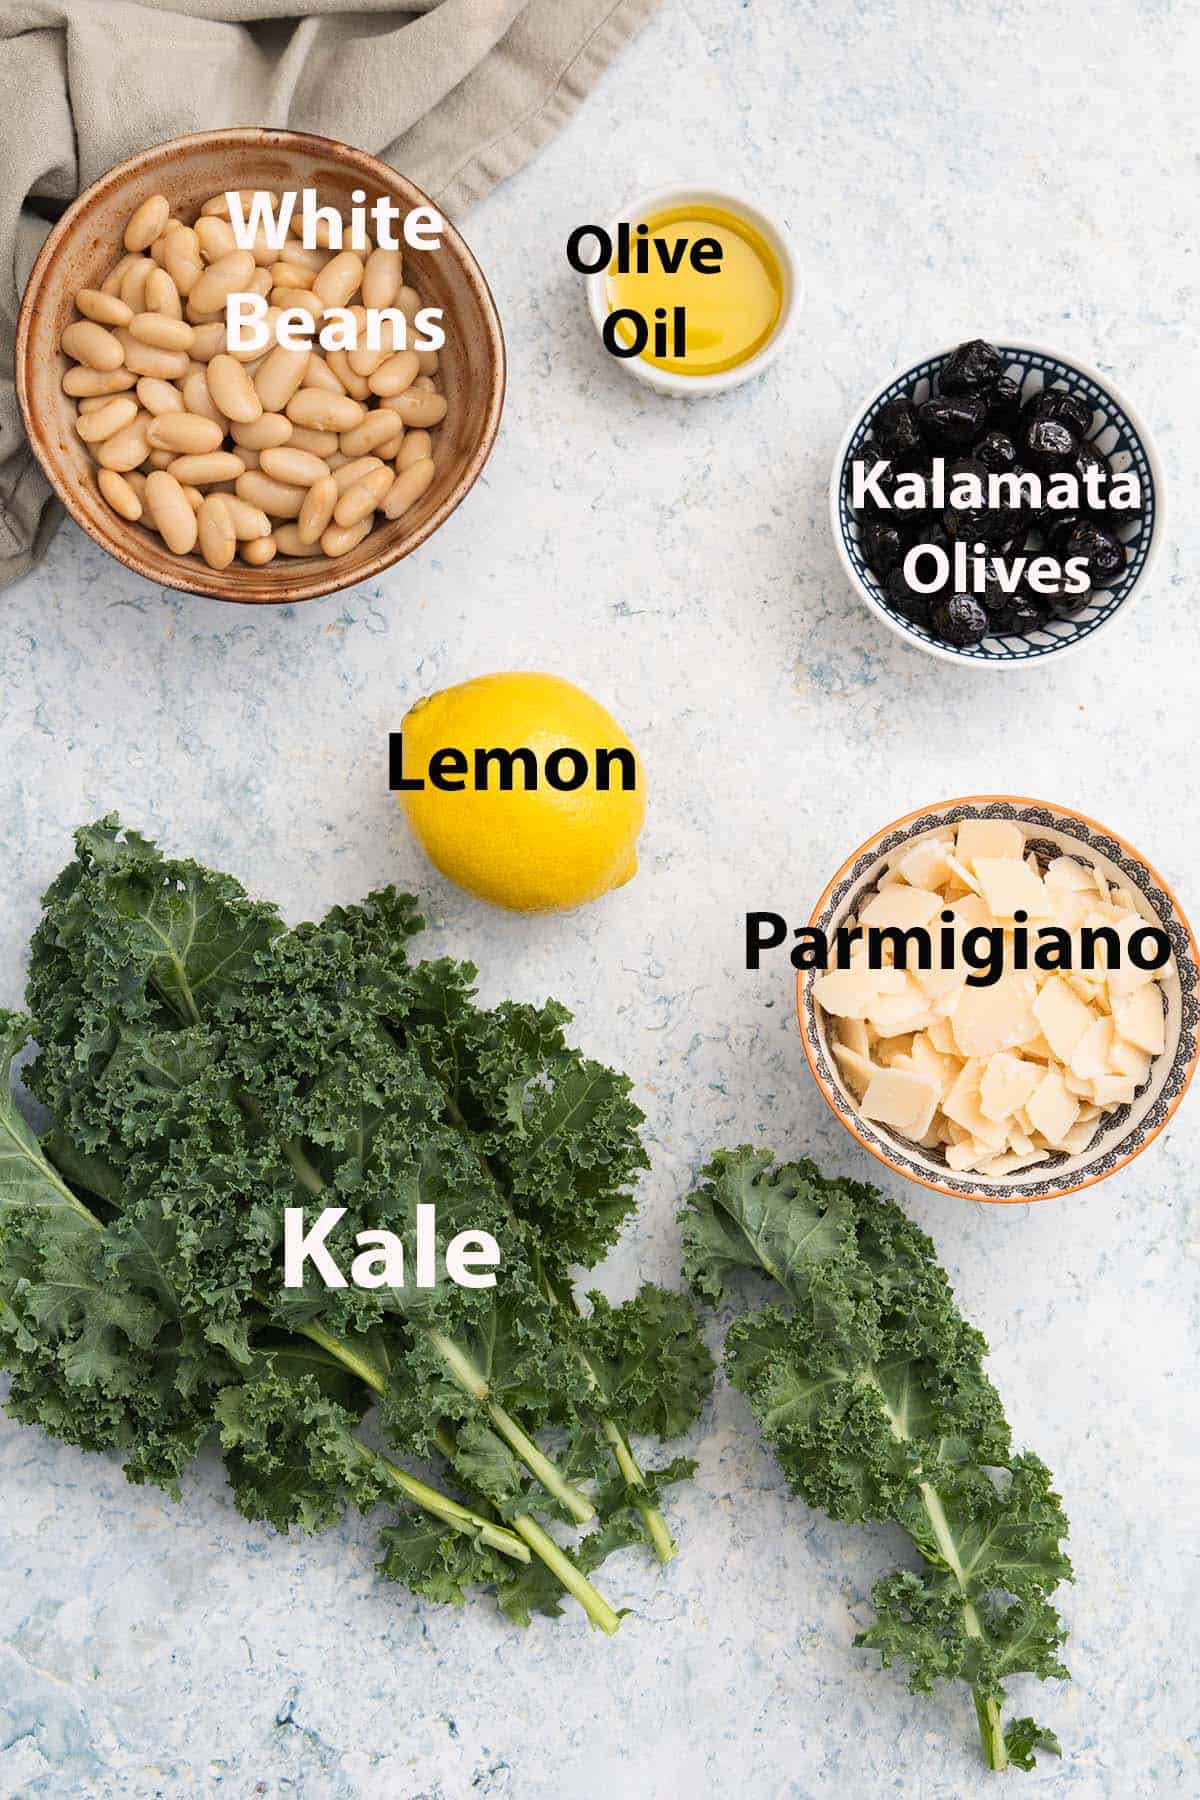 Labelled ingredients: Kale, white beans, lemon, olive oil, kalamata olives and parmigiano.